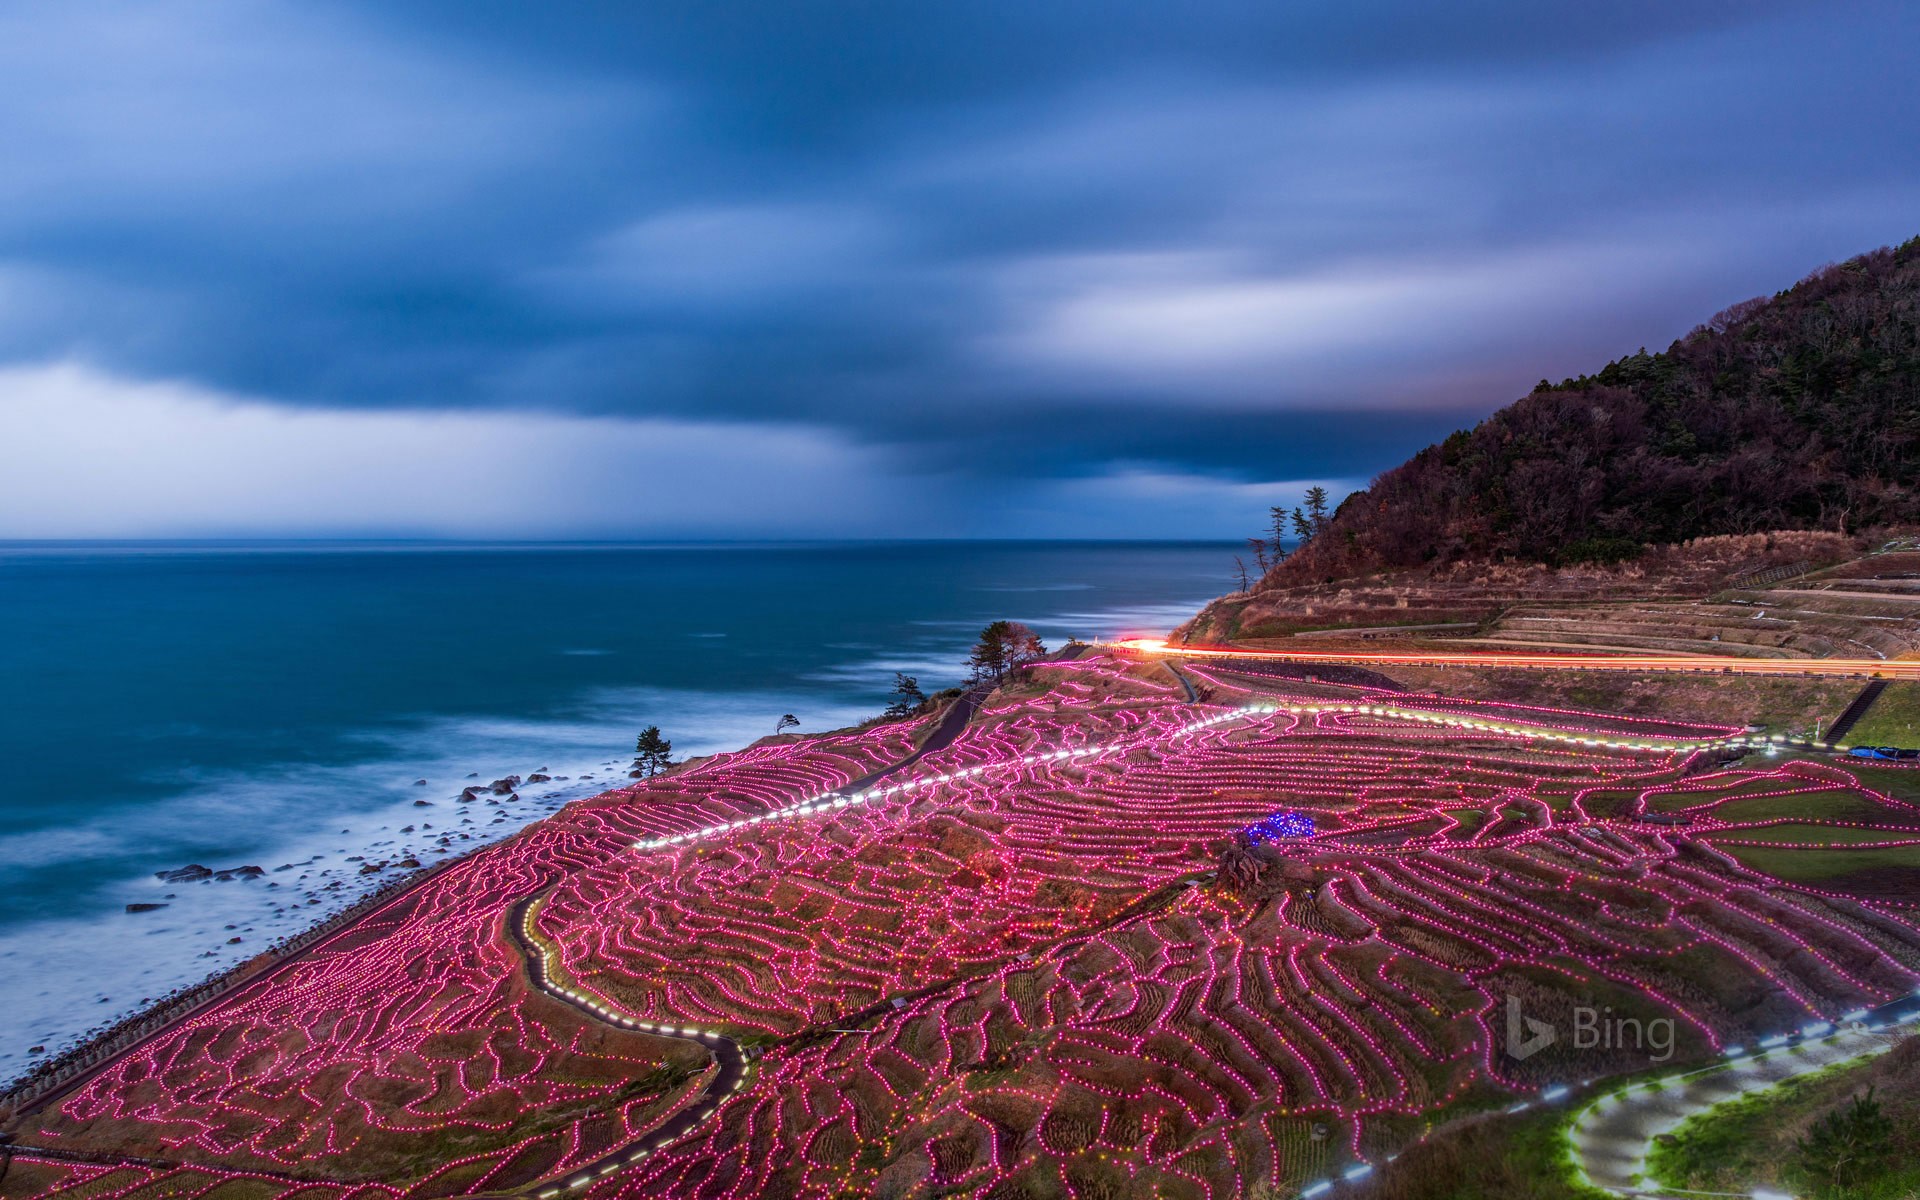 Rice terraces strung with lights, Wajima, Japan